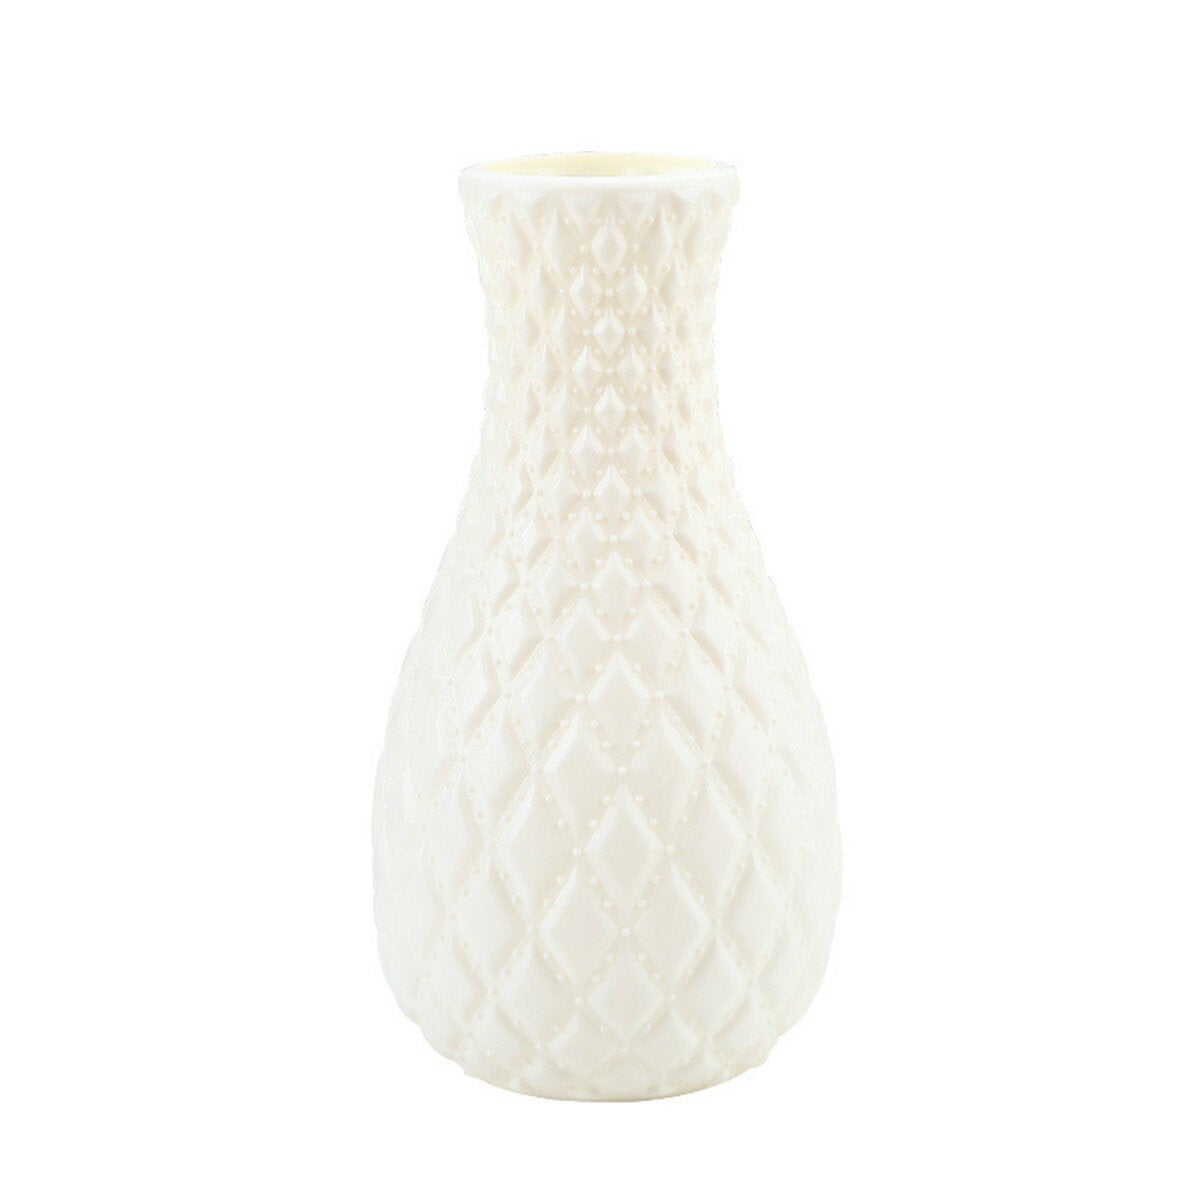 2Pcs Mini Origami Plastic Stand Imitation Ceramic Flower Vase Pot Decorations Off-White